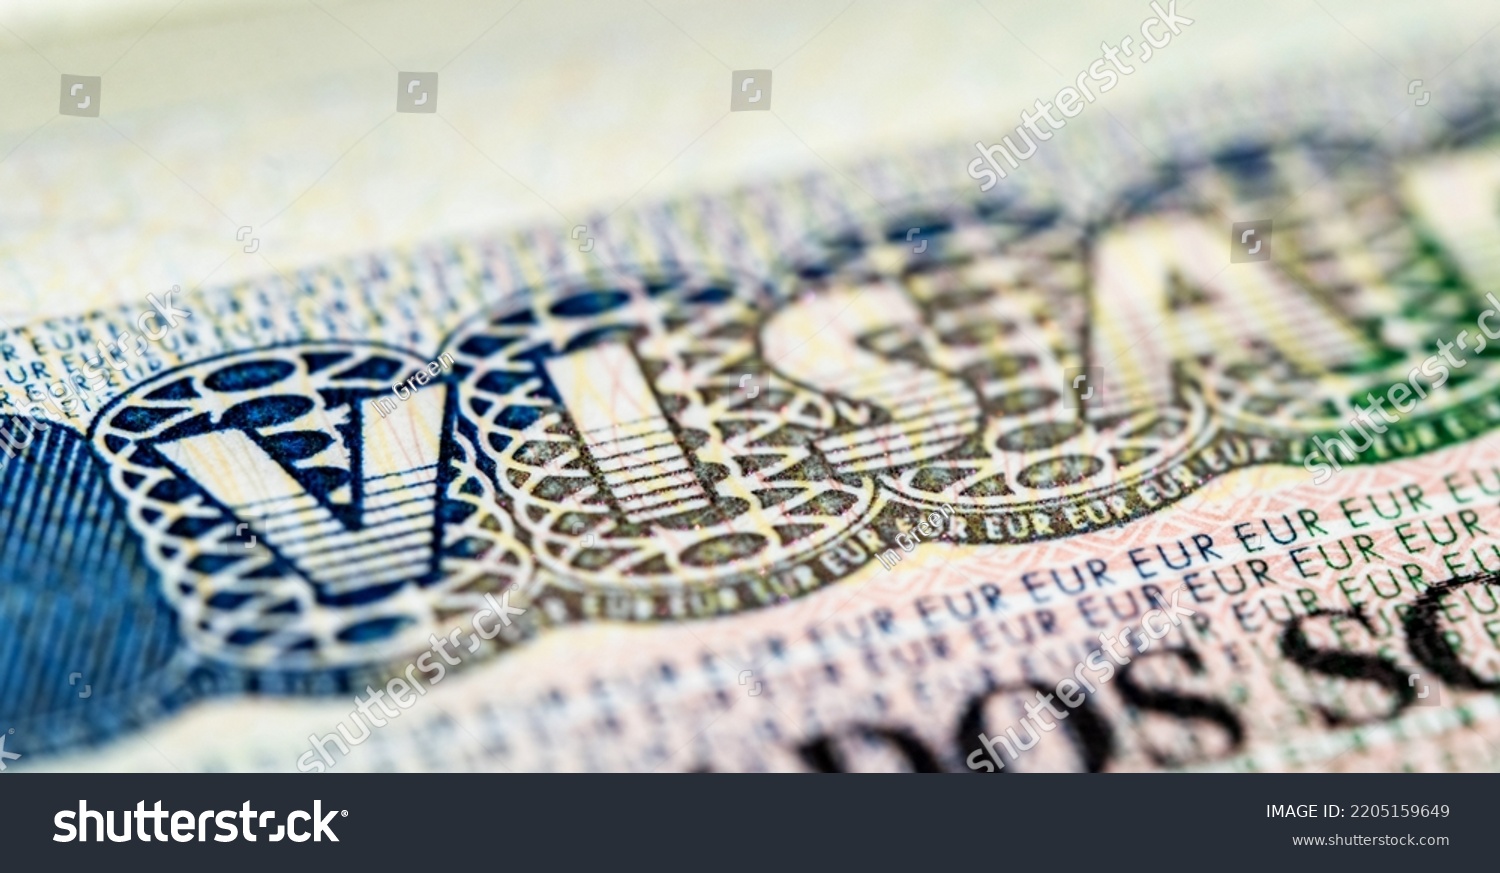 Internationa visa in passport close up view. Schengen visa in passport. #2205159649